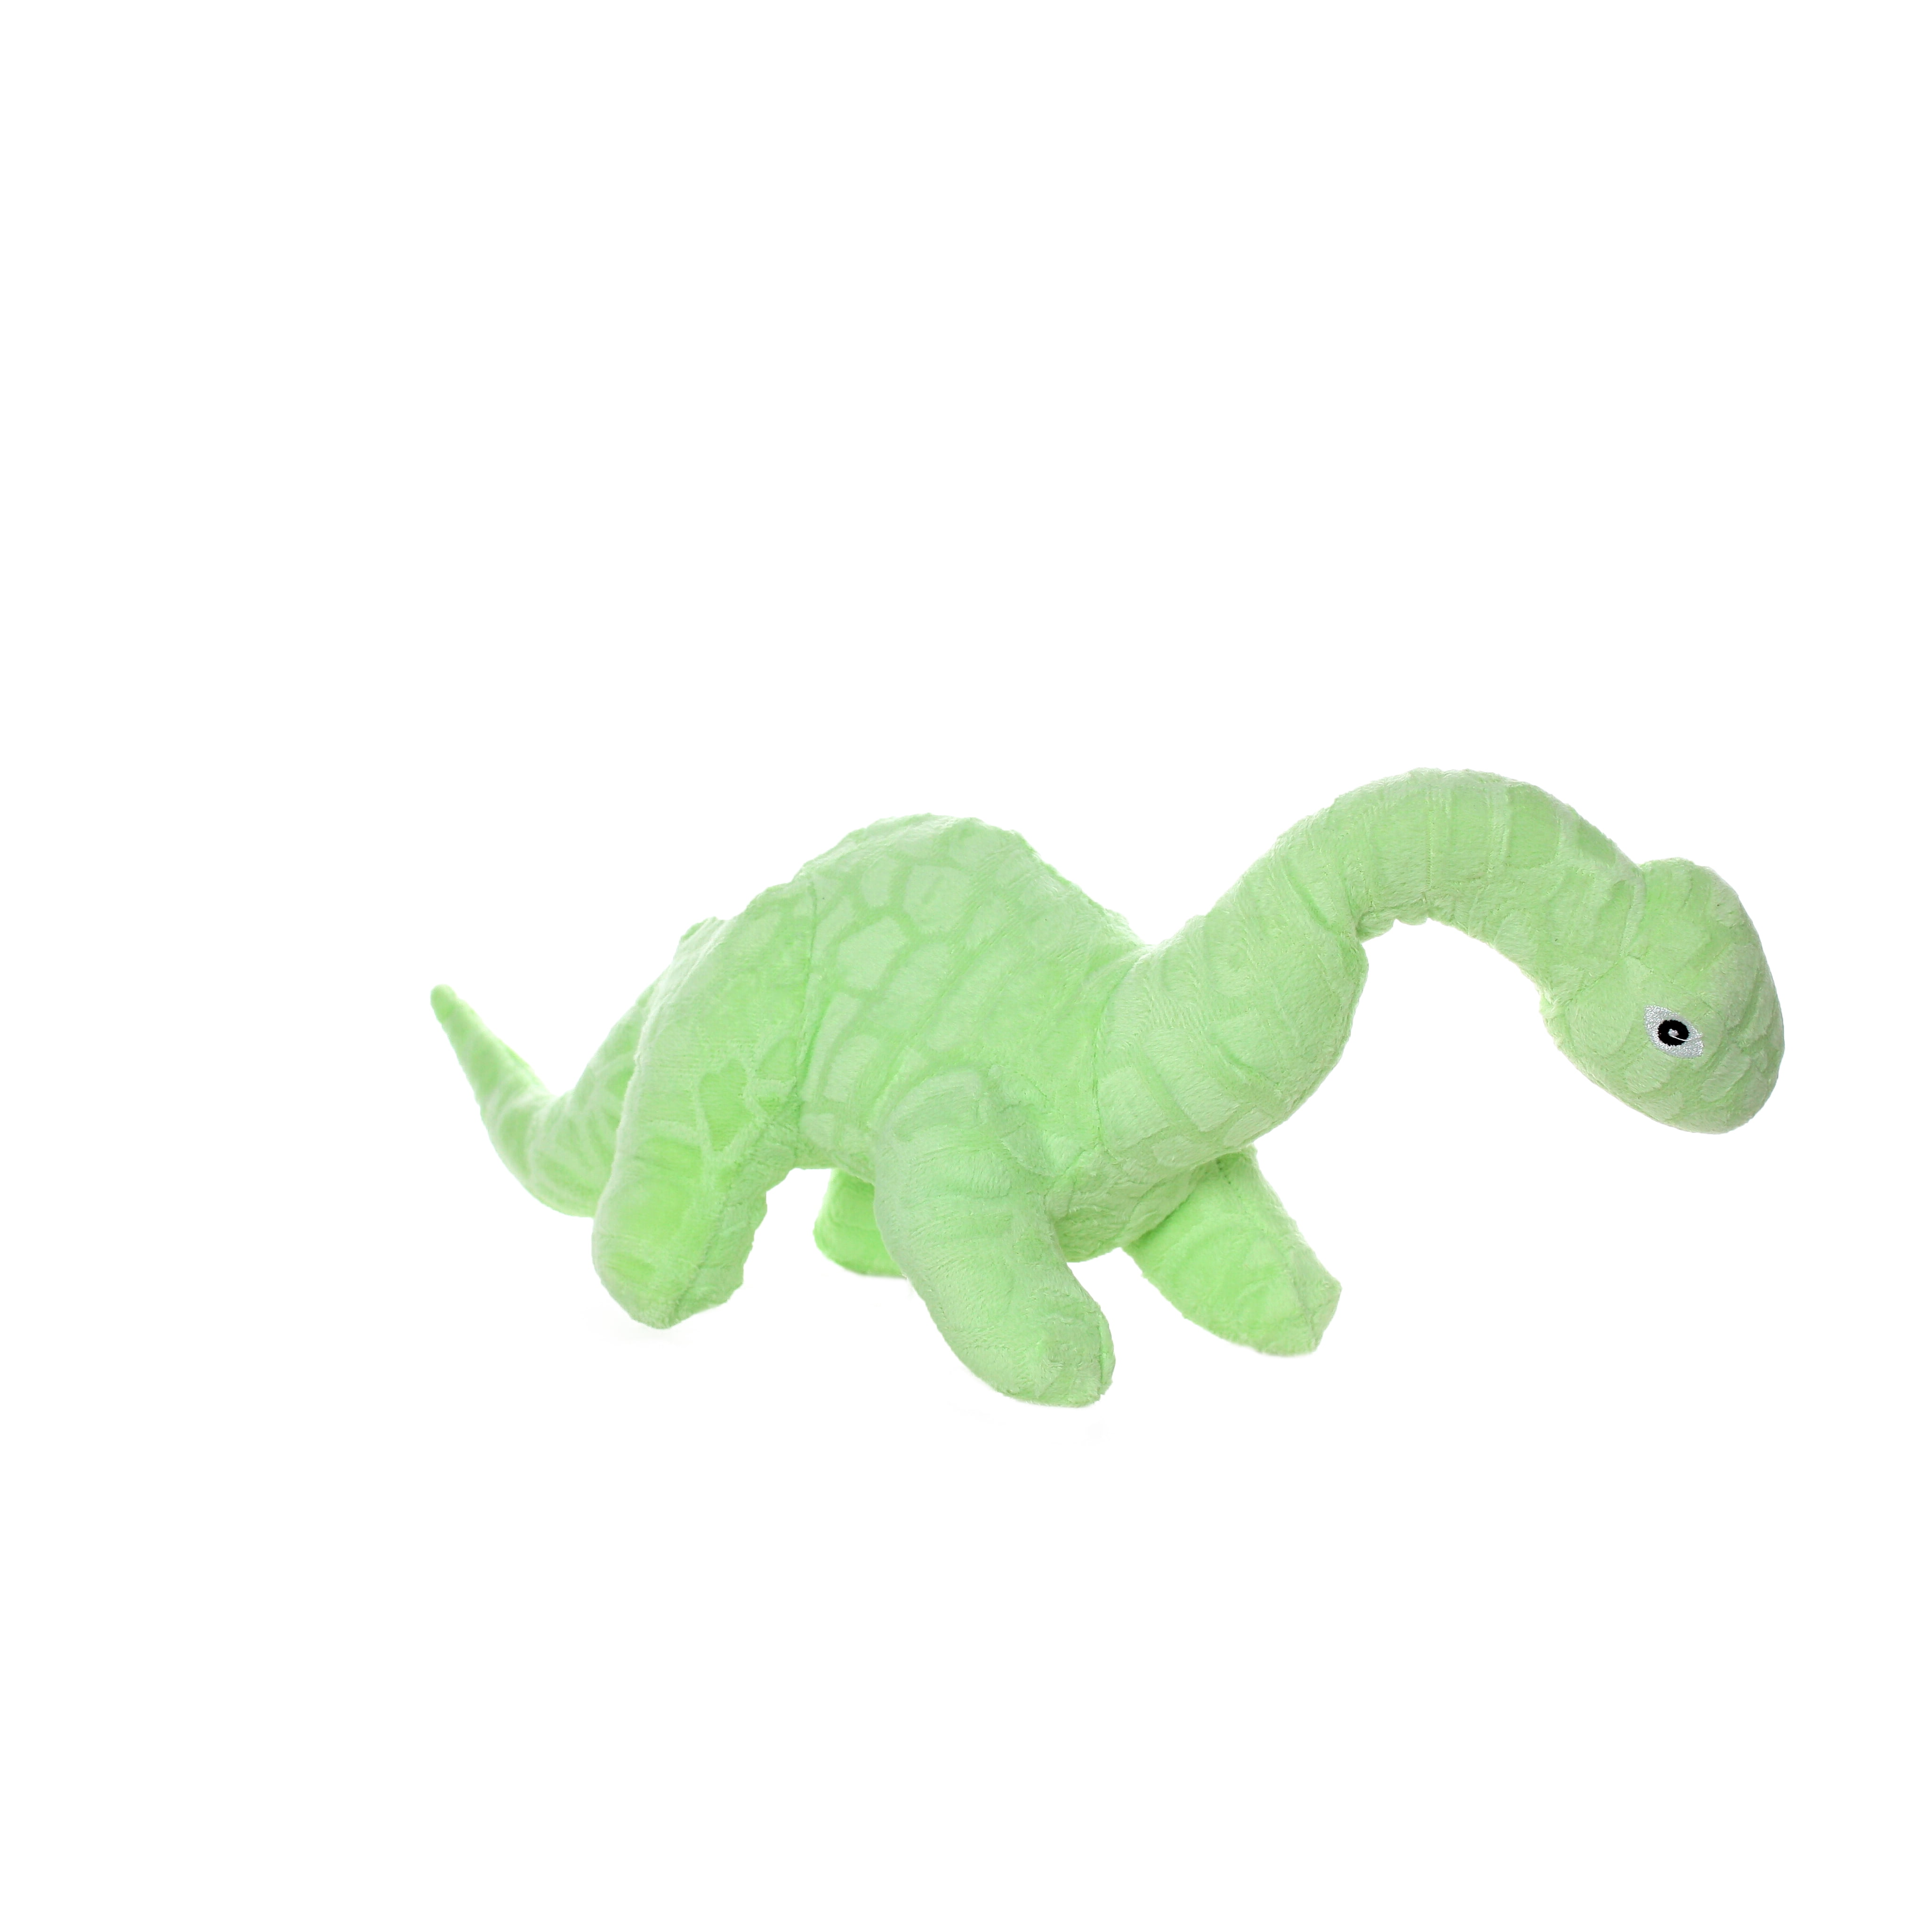 squeaky dinosaur toy